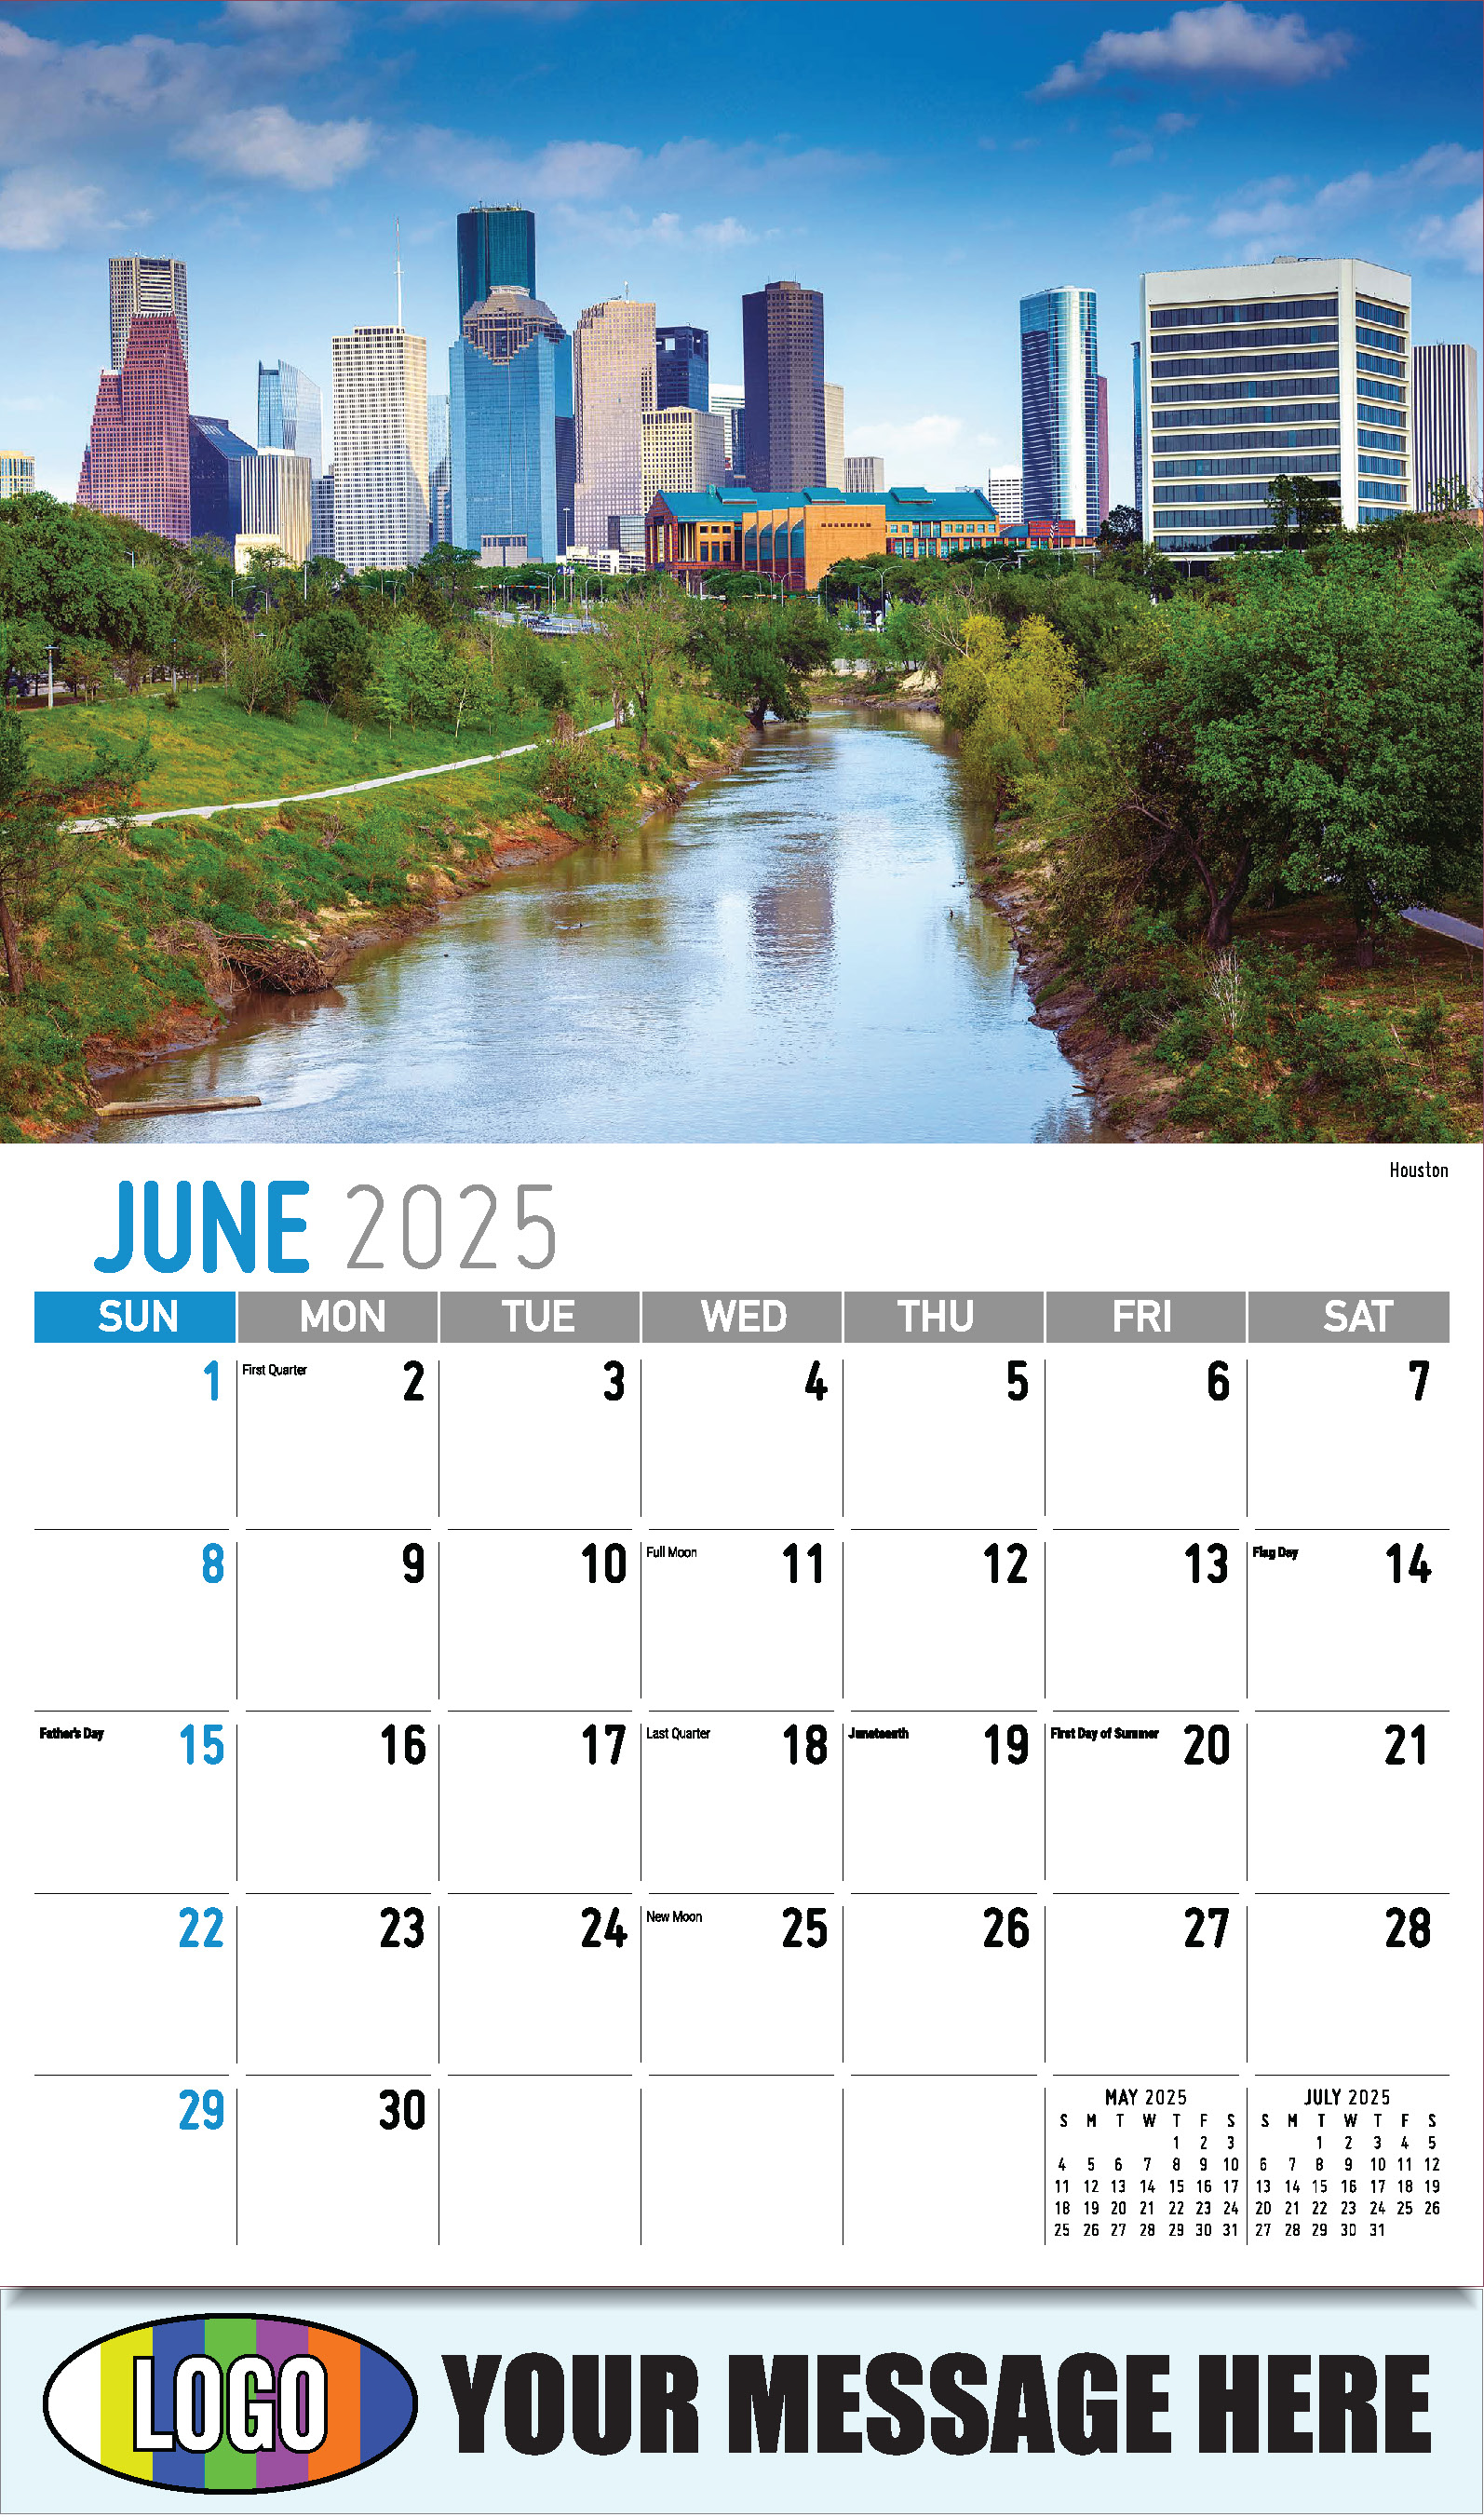 Scenes of Texas 2025 Business Advertising Calendar - June